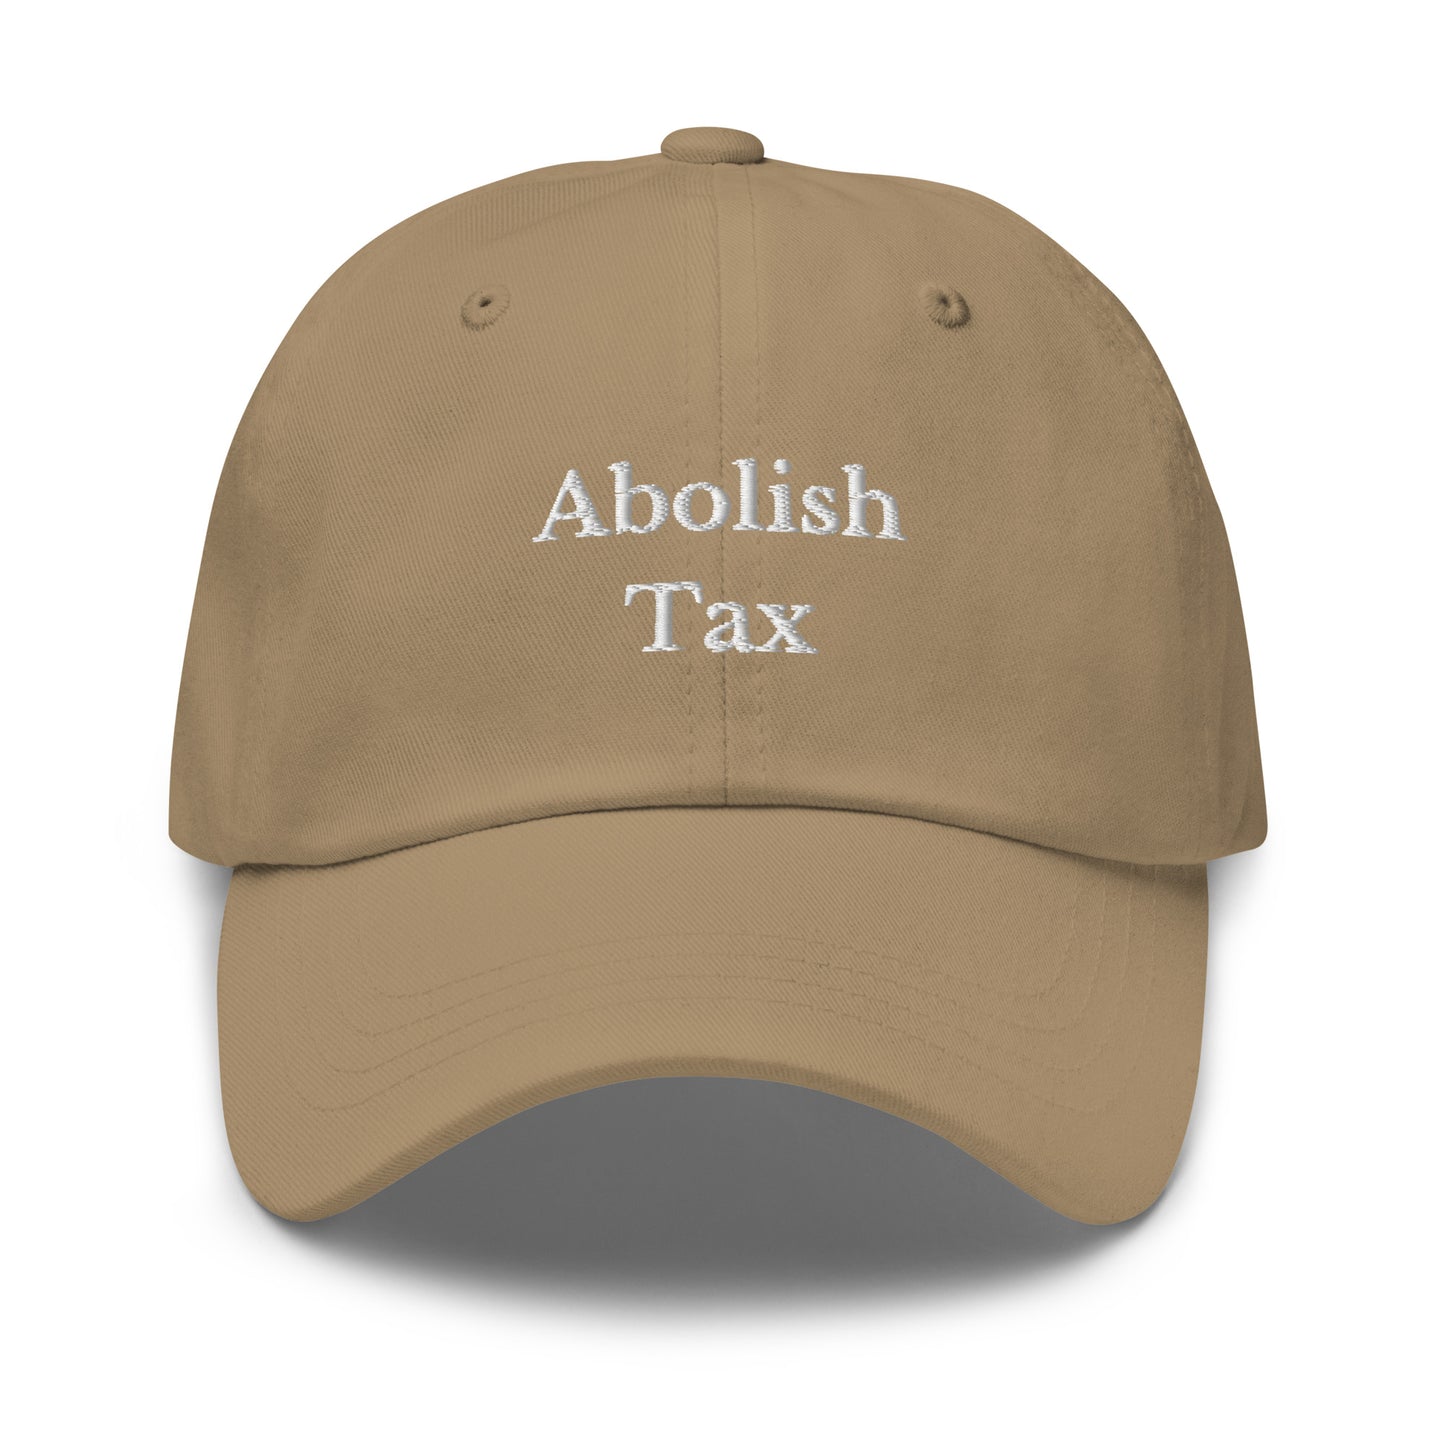 Abolish Tax Cap